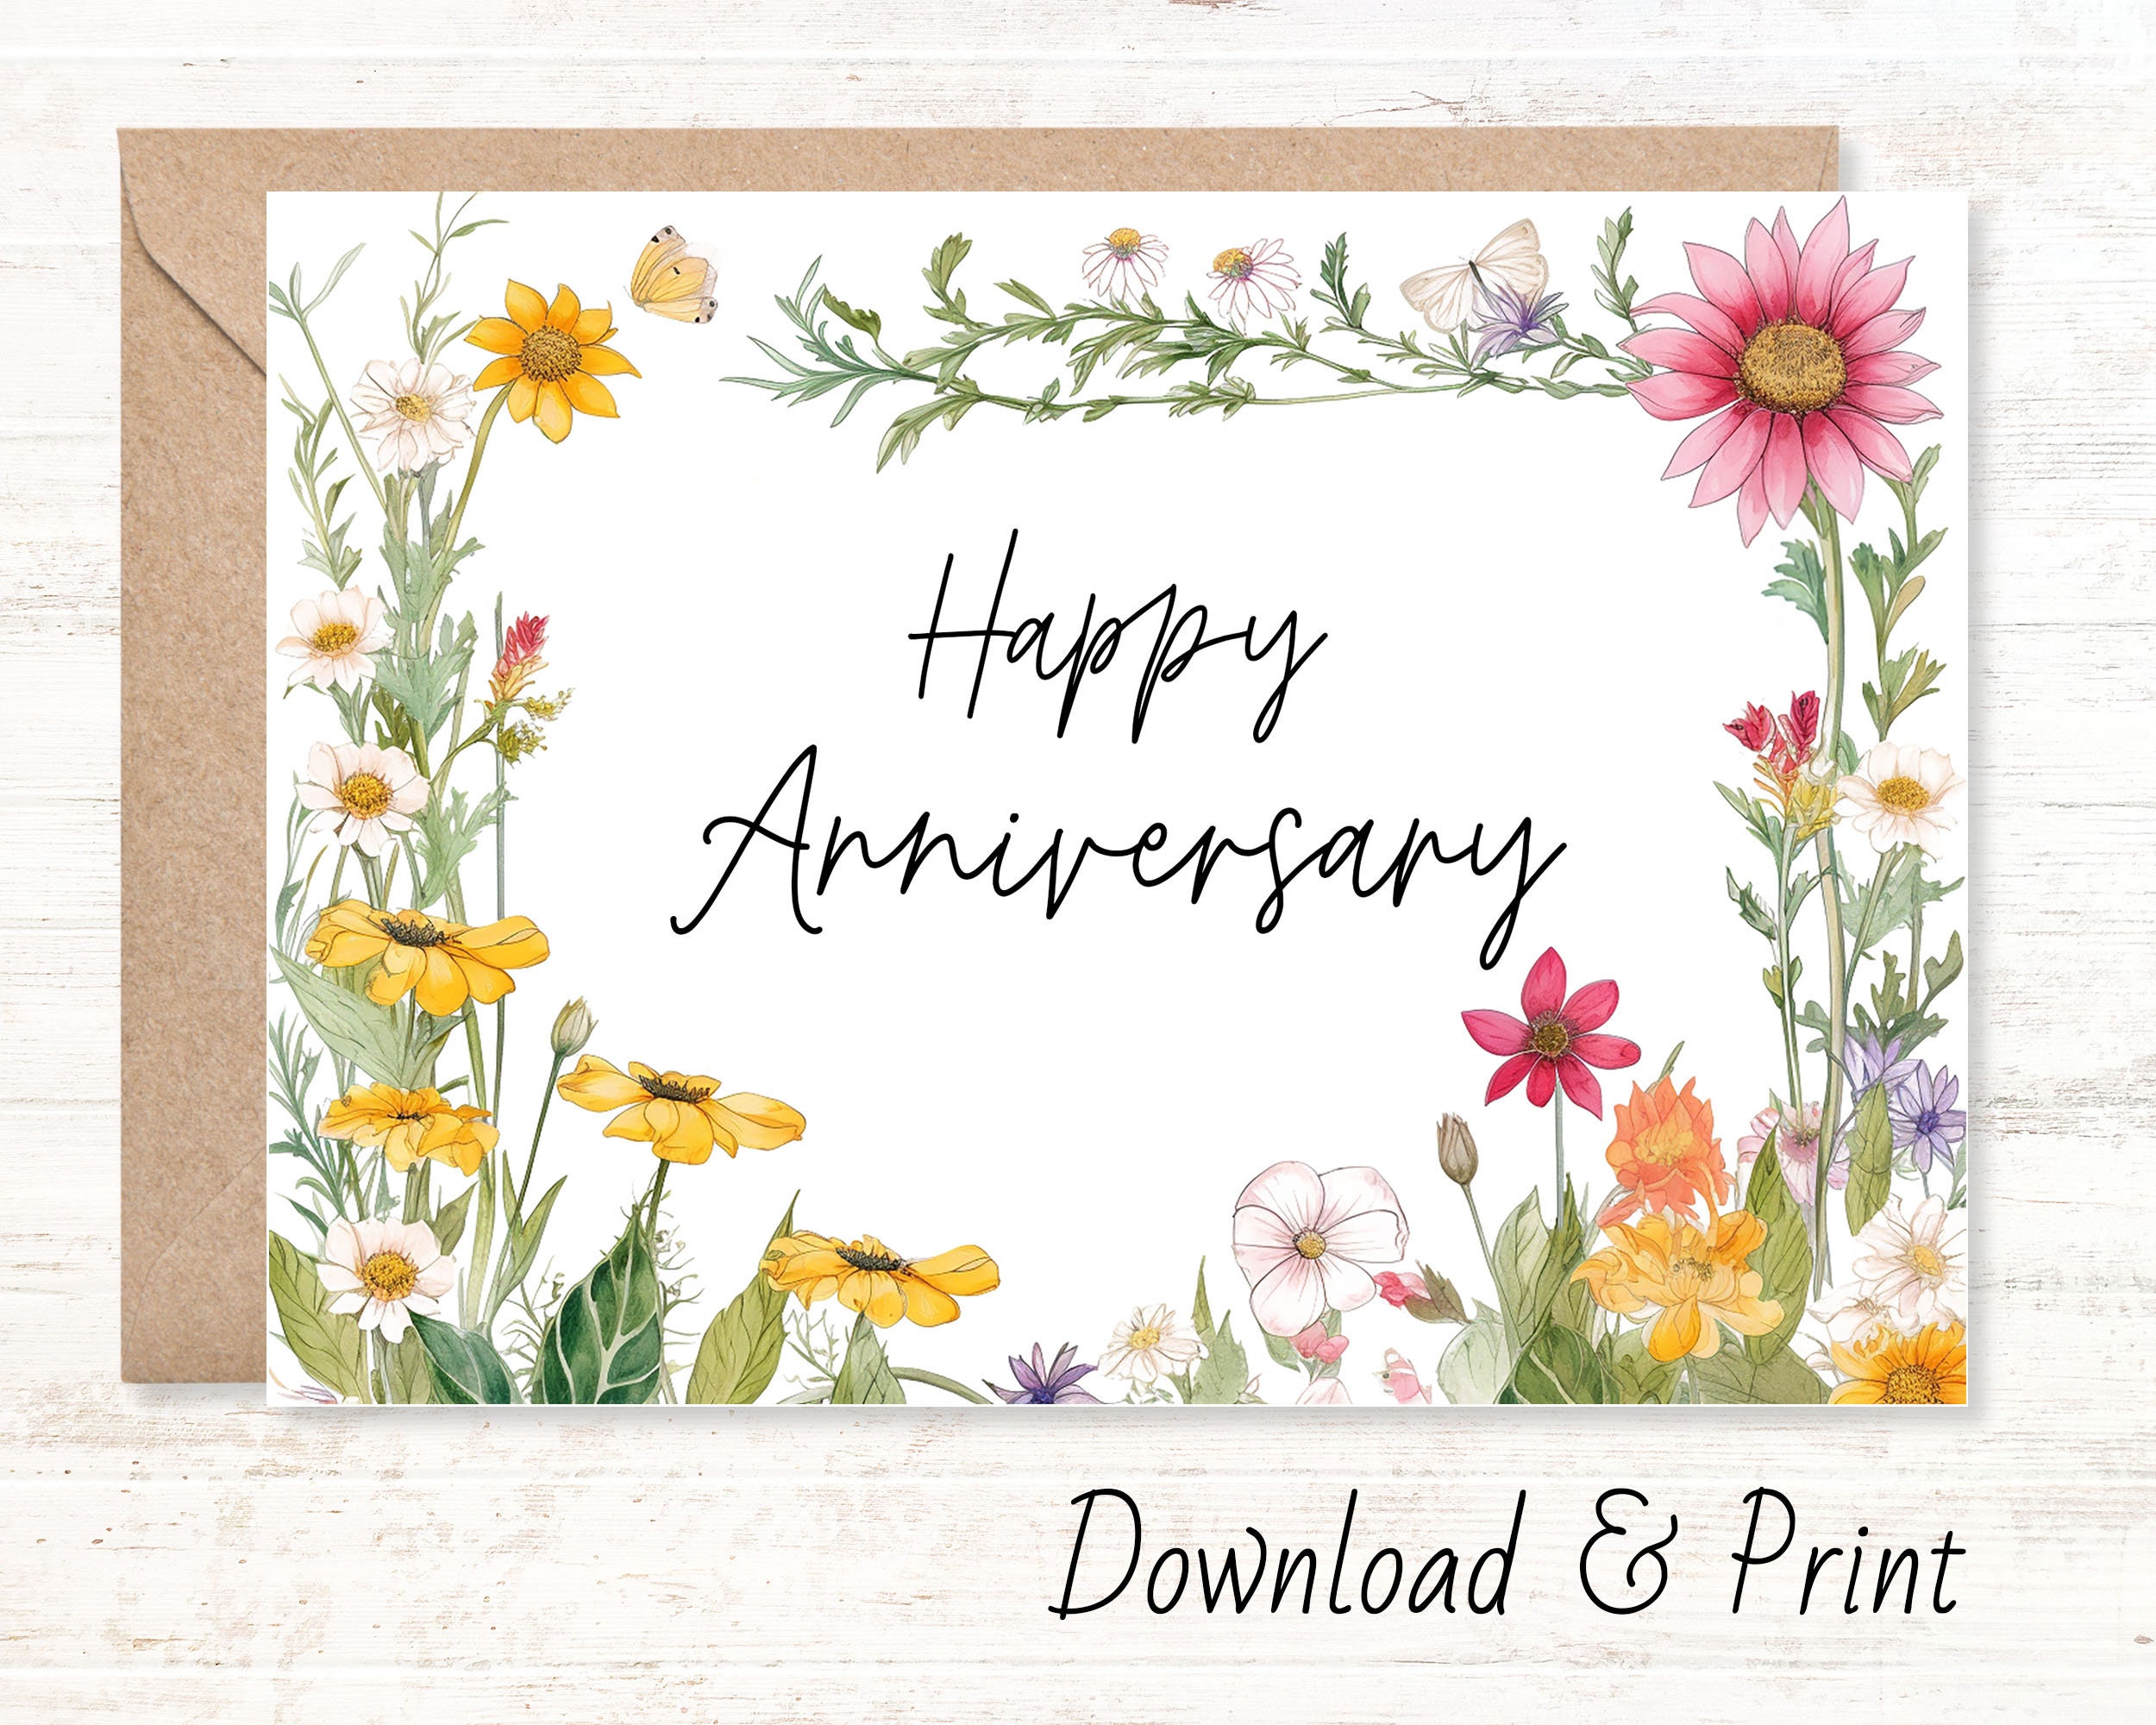 Happy Anniversary Digital Print at Home Tag, Anniversary Flowers